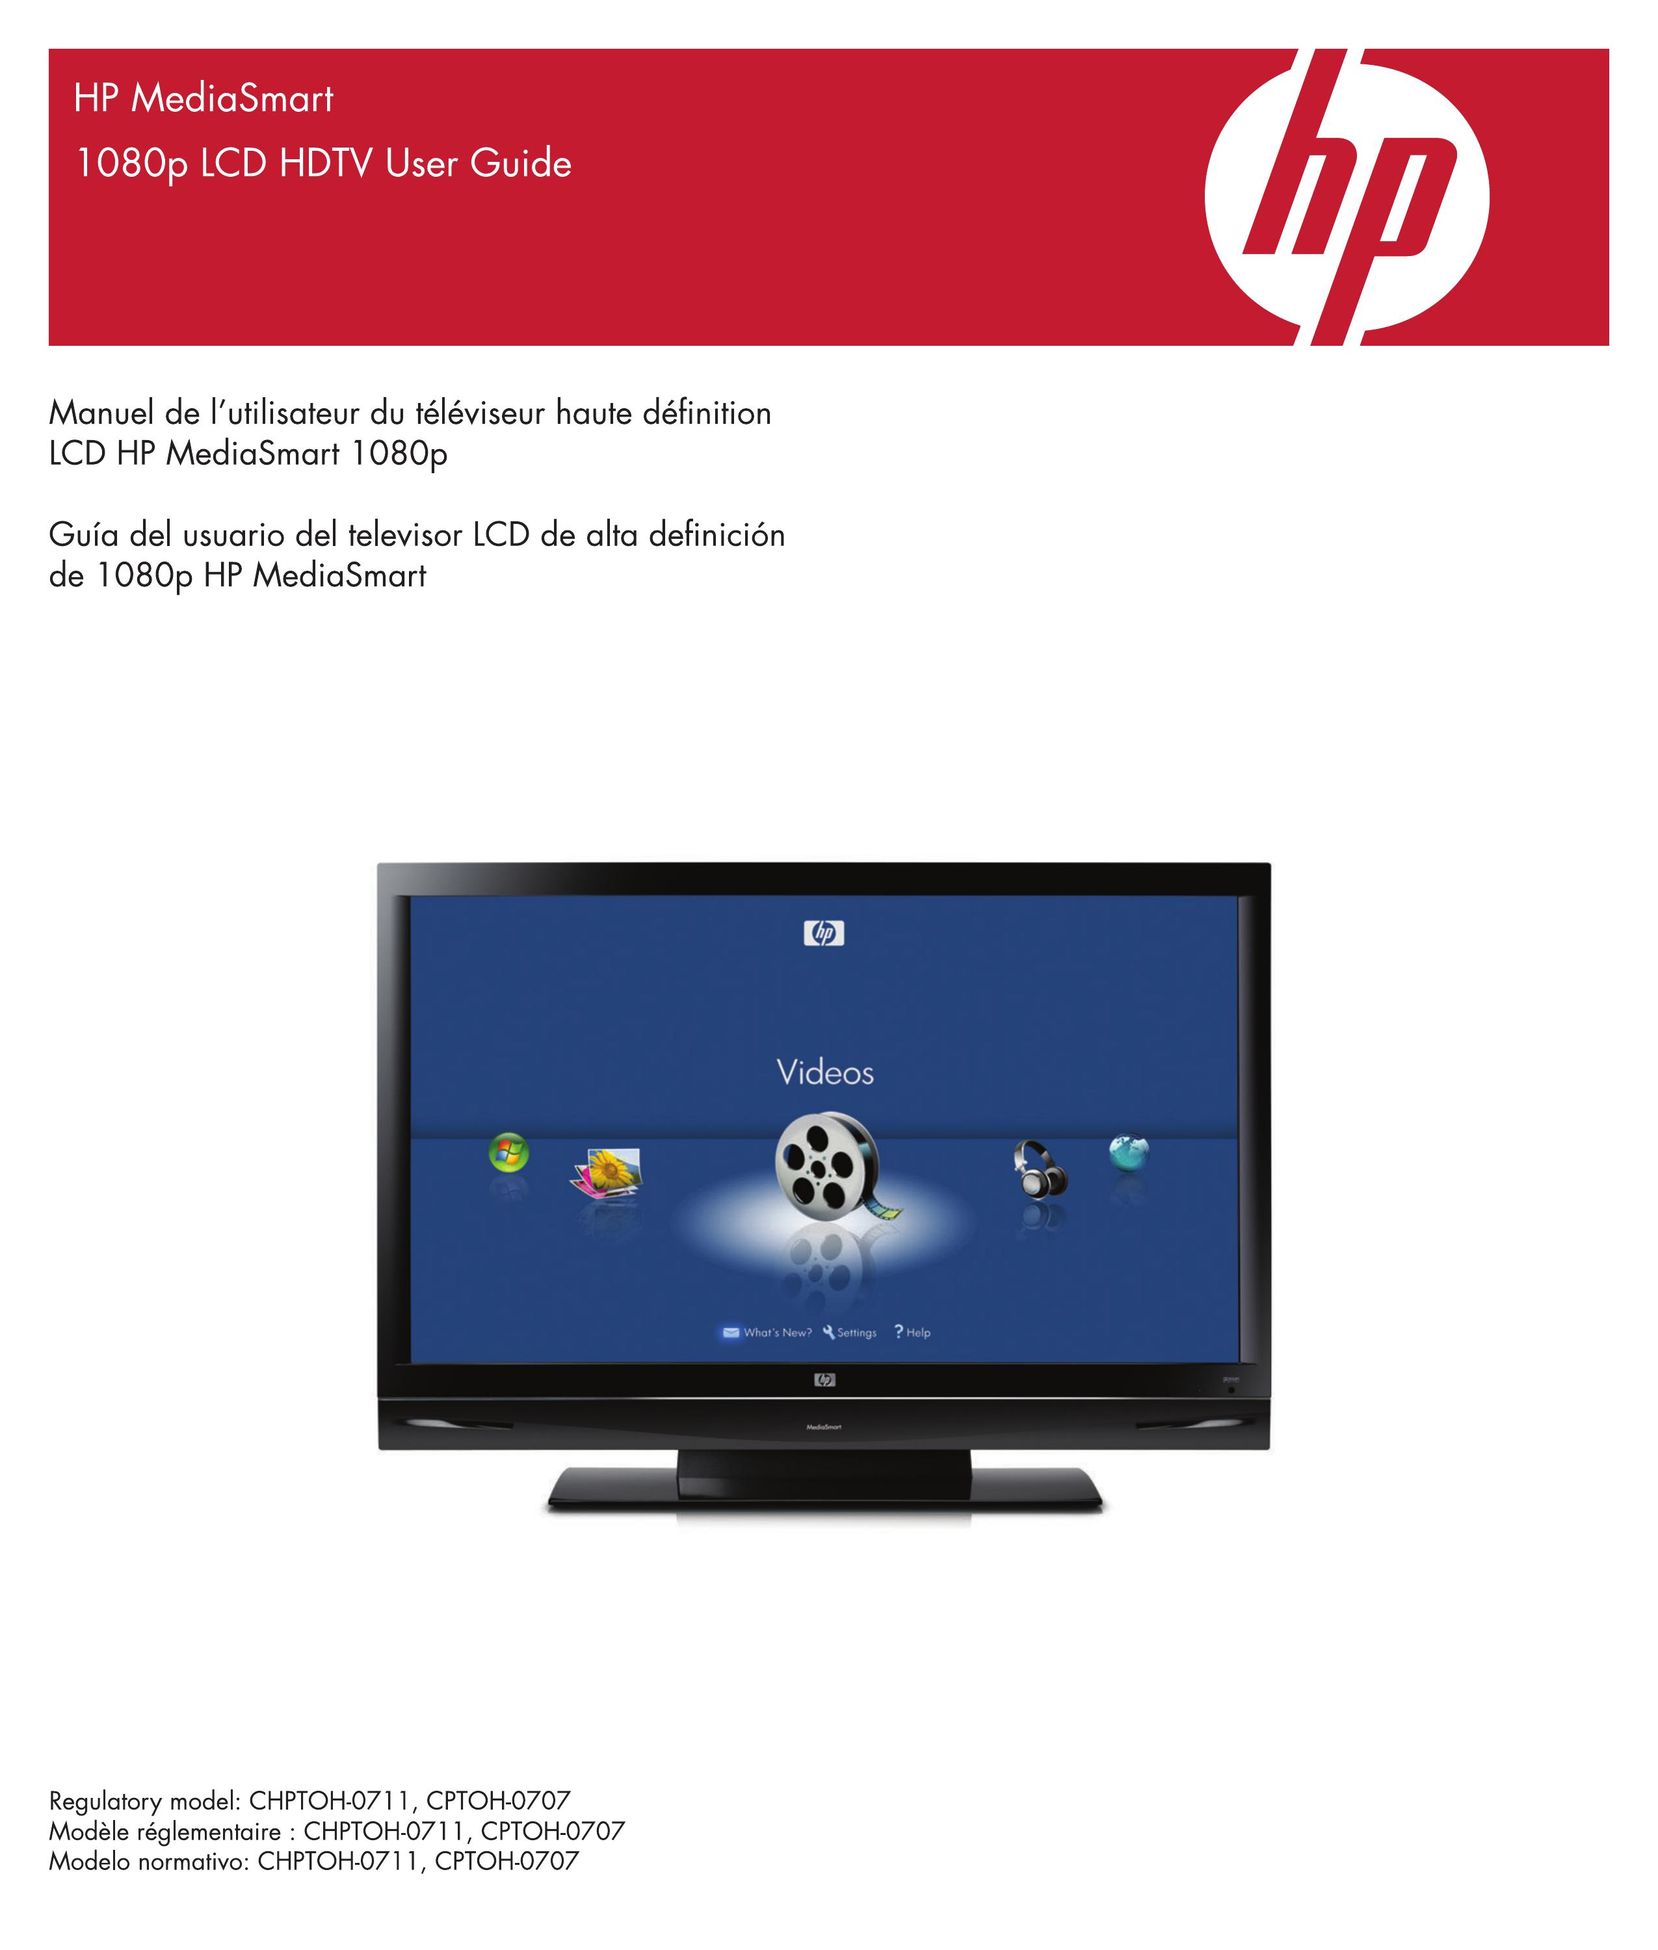 HP (Hewlett-Packard) CPTOH-0707 Flat Panel Television User Manual